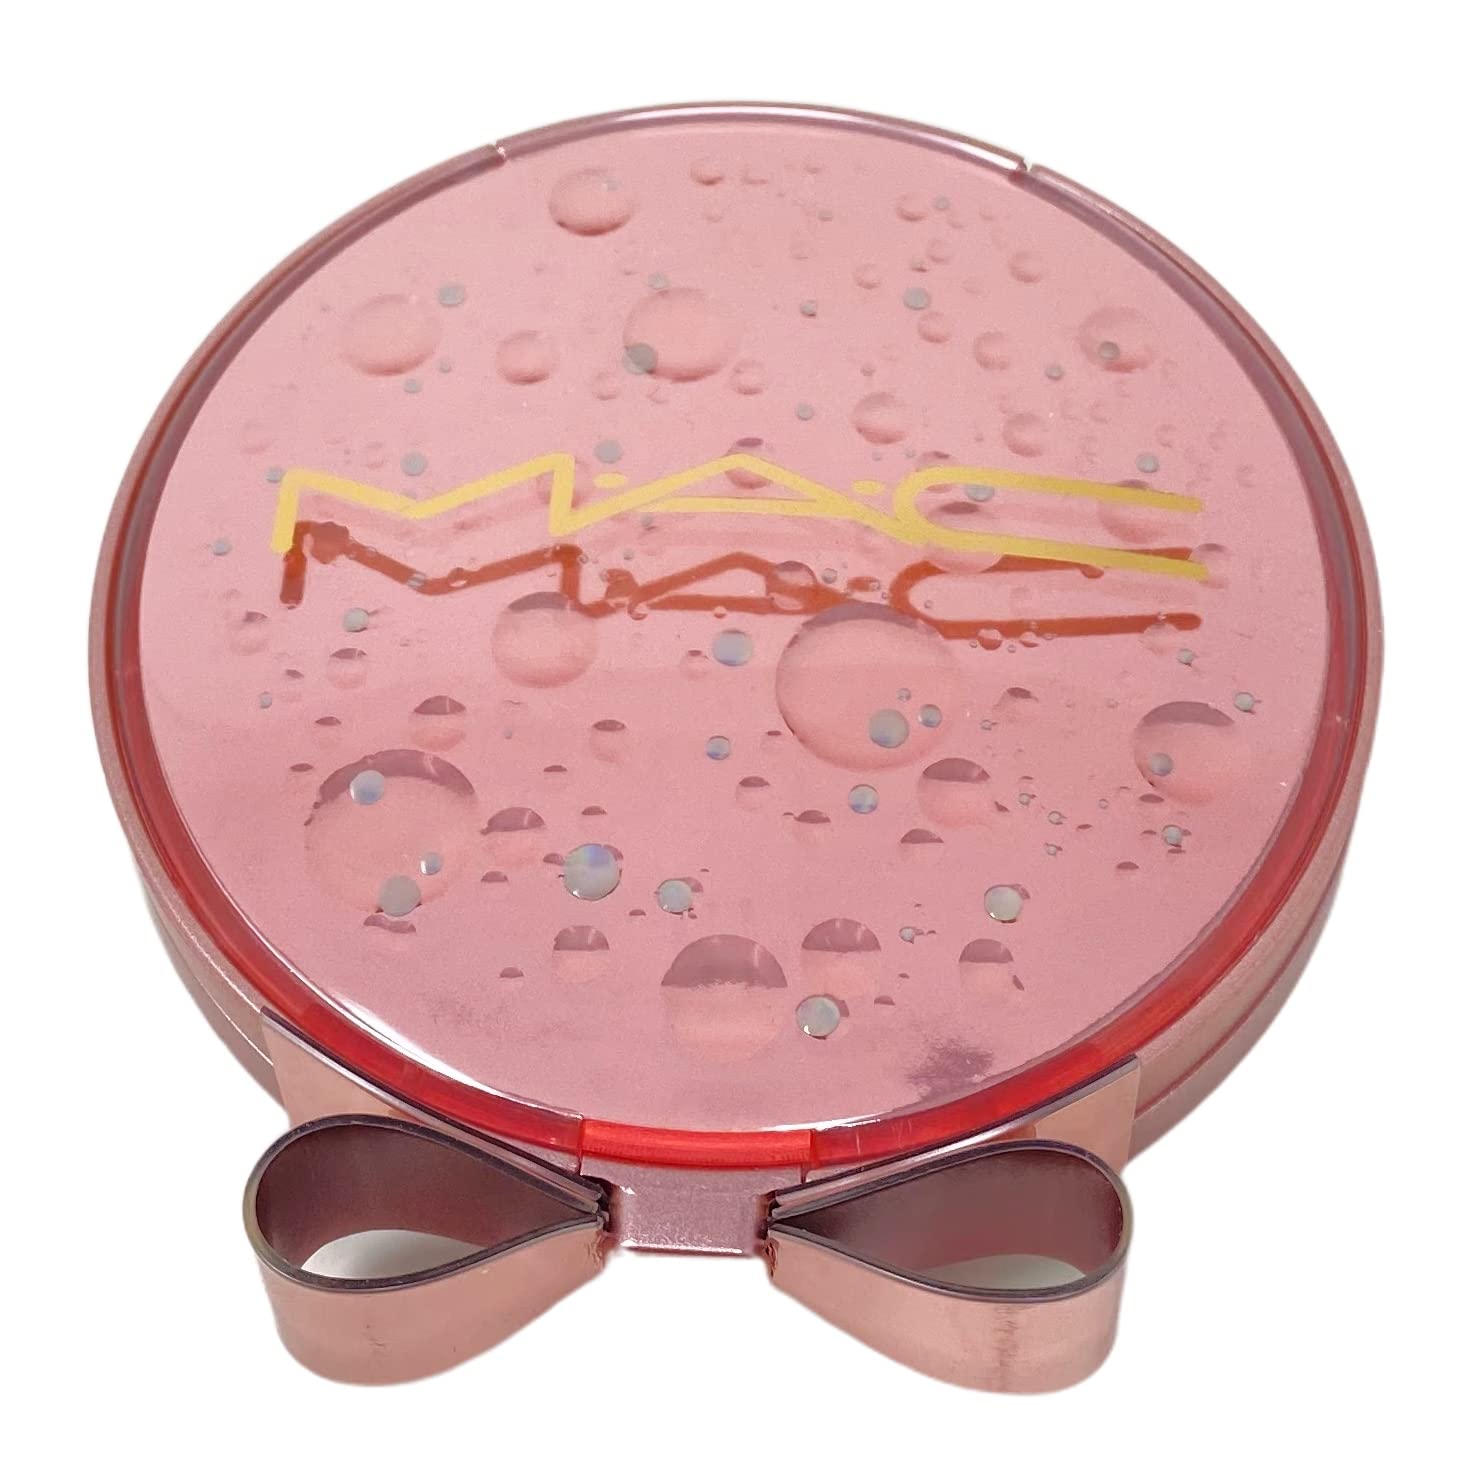 M.A.C. Limited Edition Eye Love Surprises Eye Shadow Palette x 6: Regal Rose